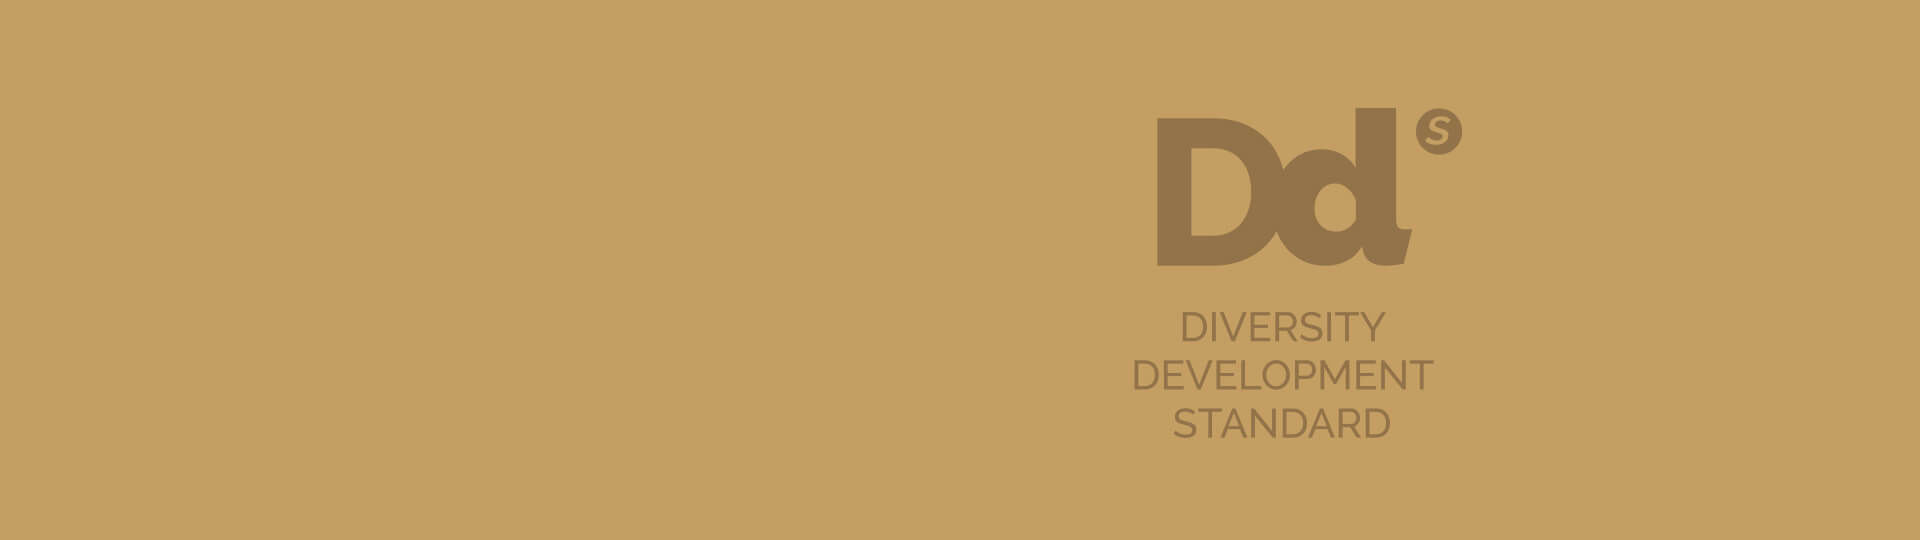 Diversity Development Standard logo on bronze background